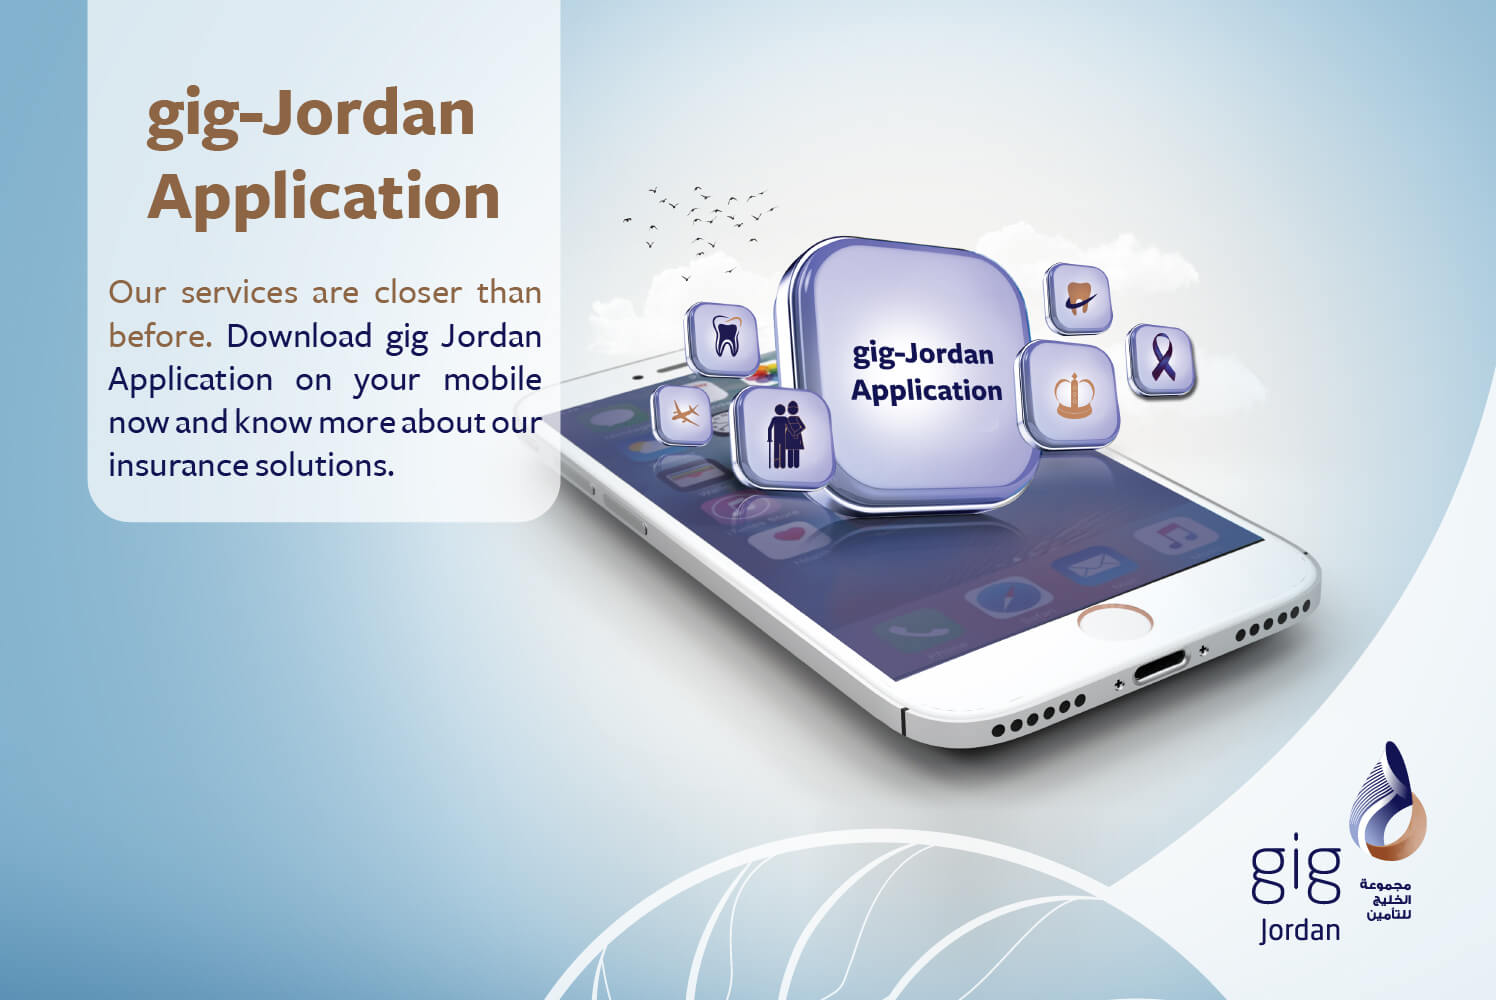 gig – Jordan launches gig Jordan new Application on smart phones